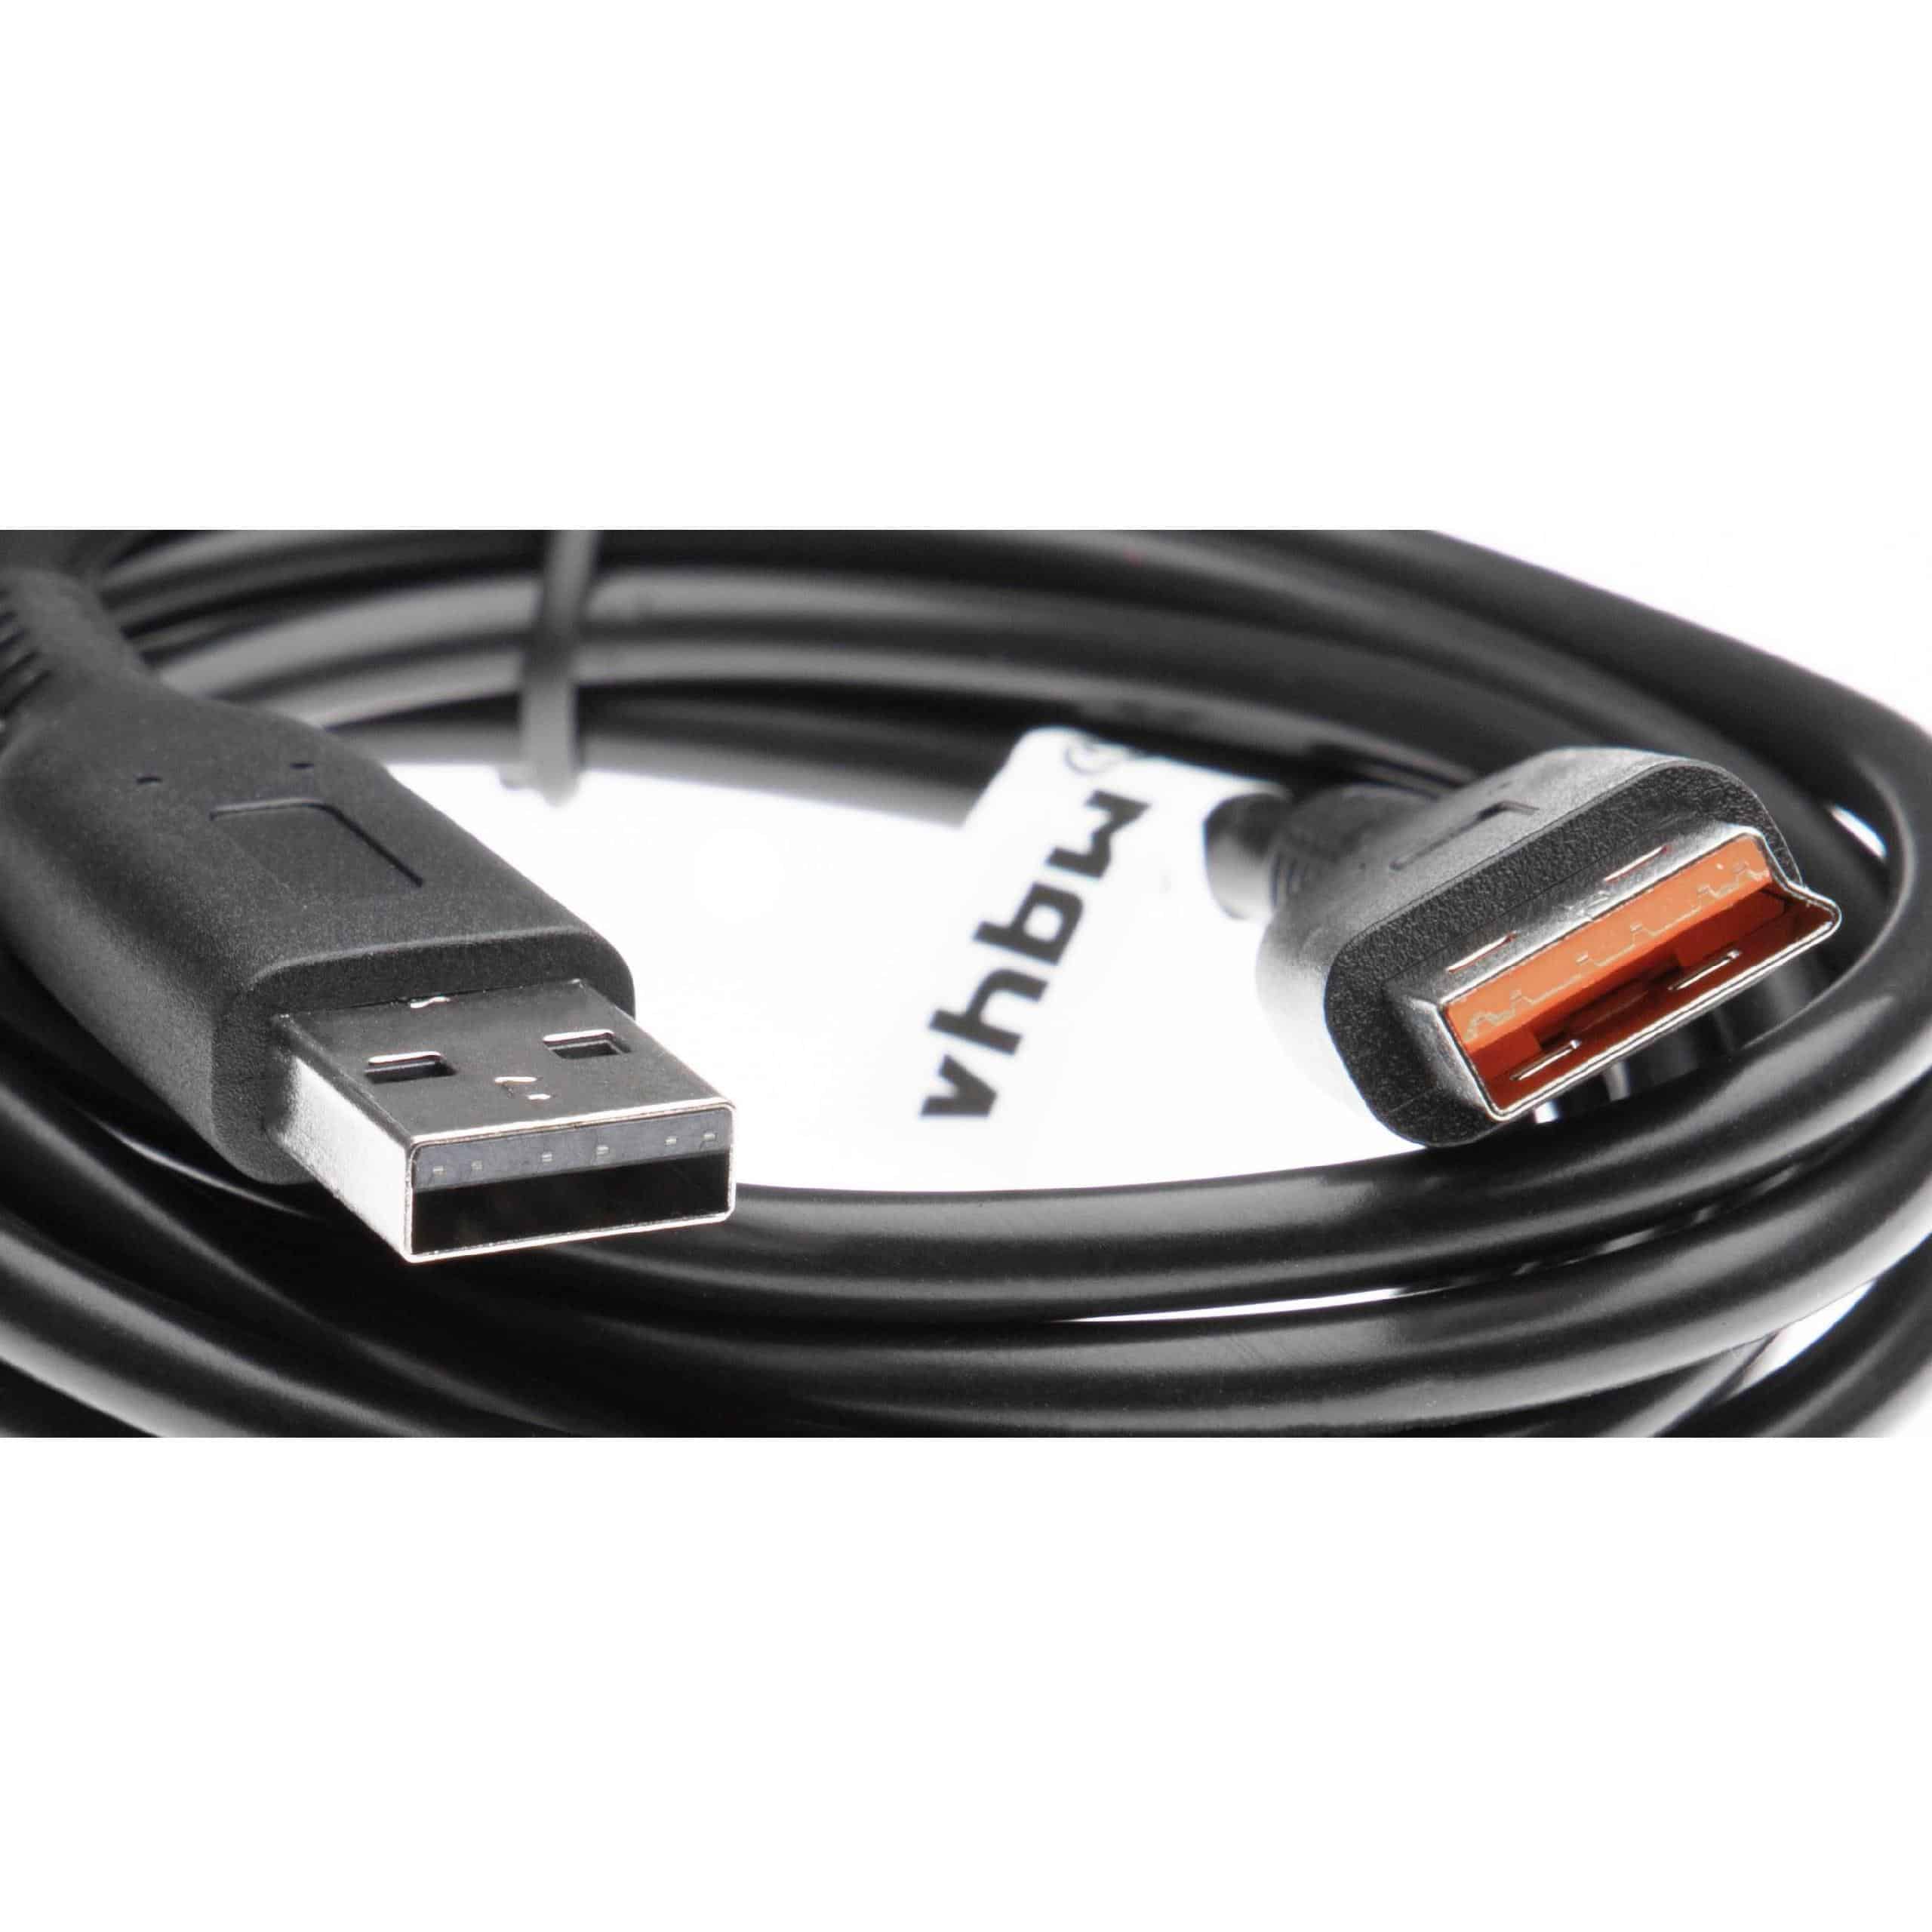 Kabel USB do transmisji danych zamiennik Lenovo 5L60J33144, 5L60J33145 do aparatu Lenovo - 200cm 